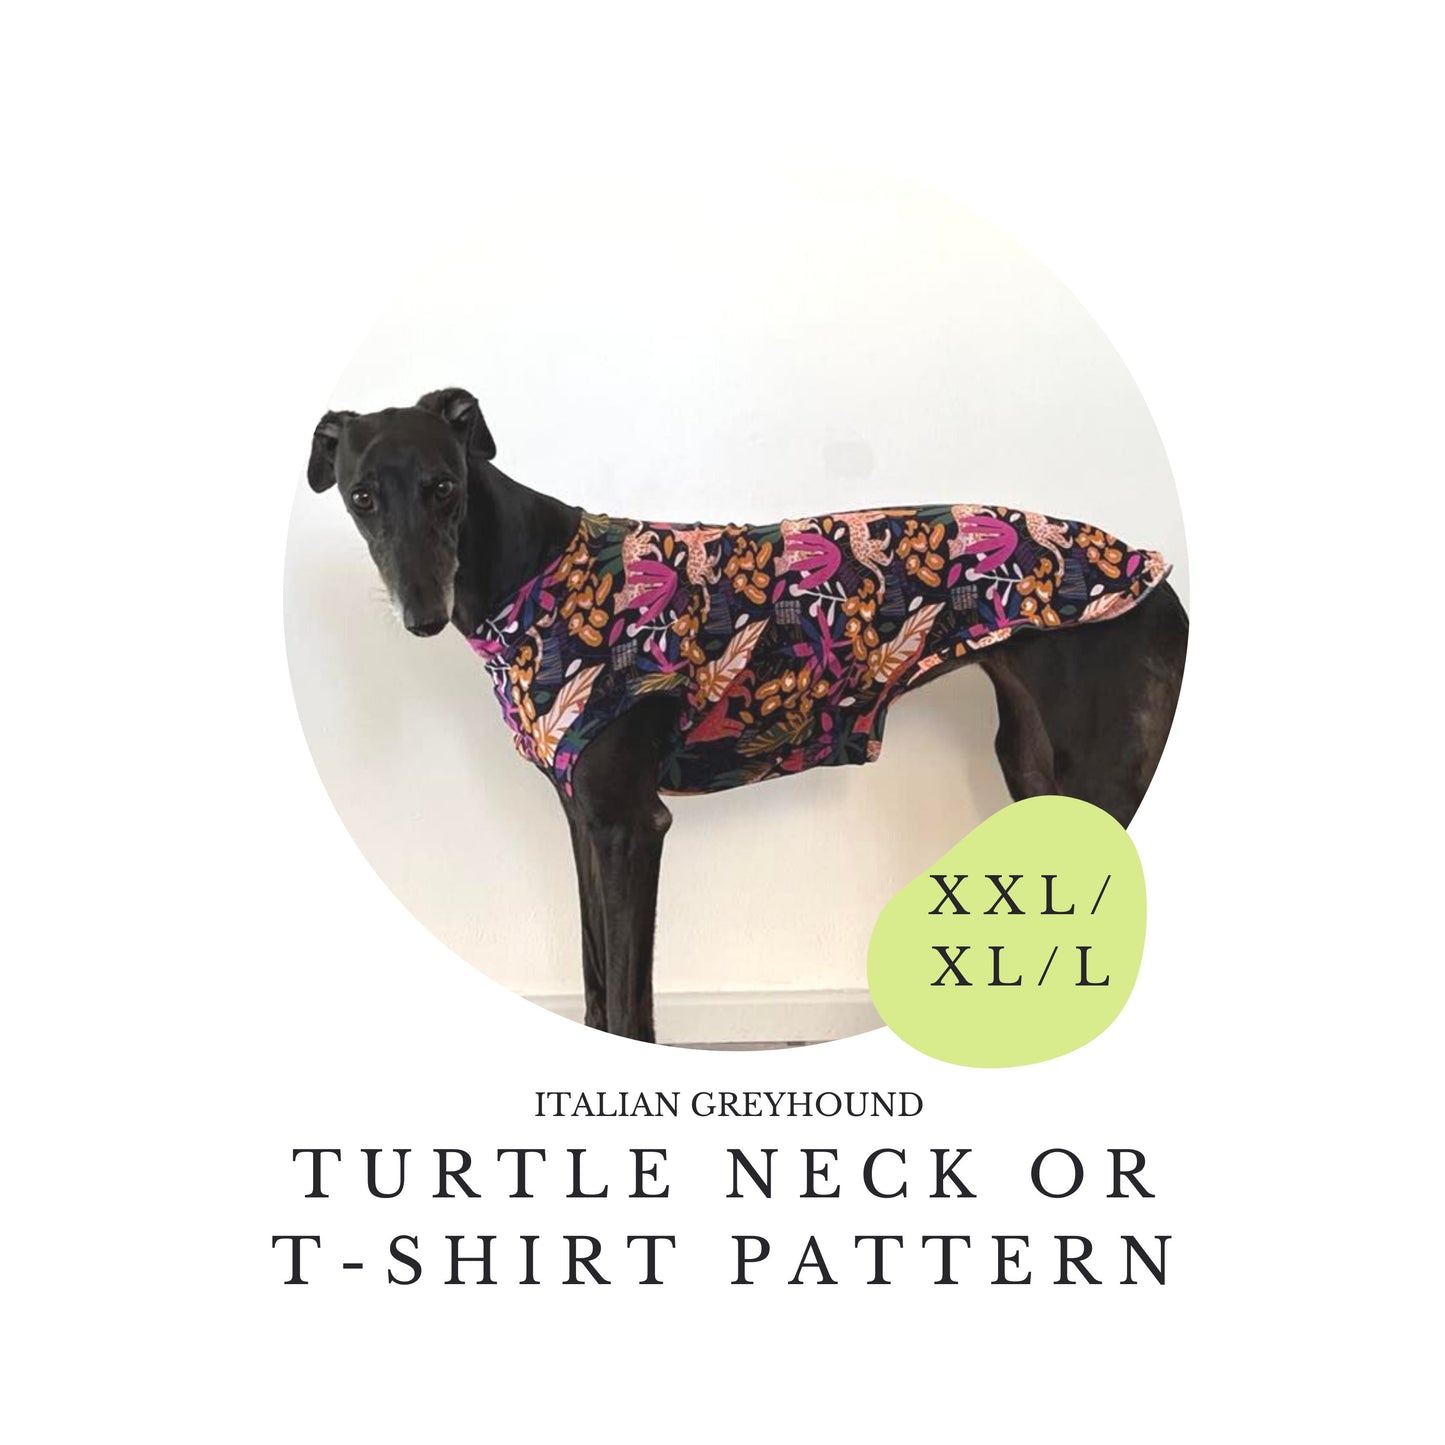 L/XL/XXL Italian Greyhound Turtle Neck / T-shirt